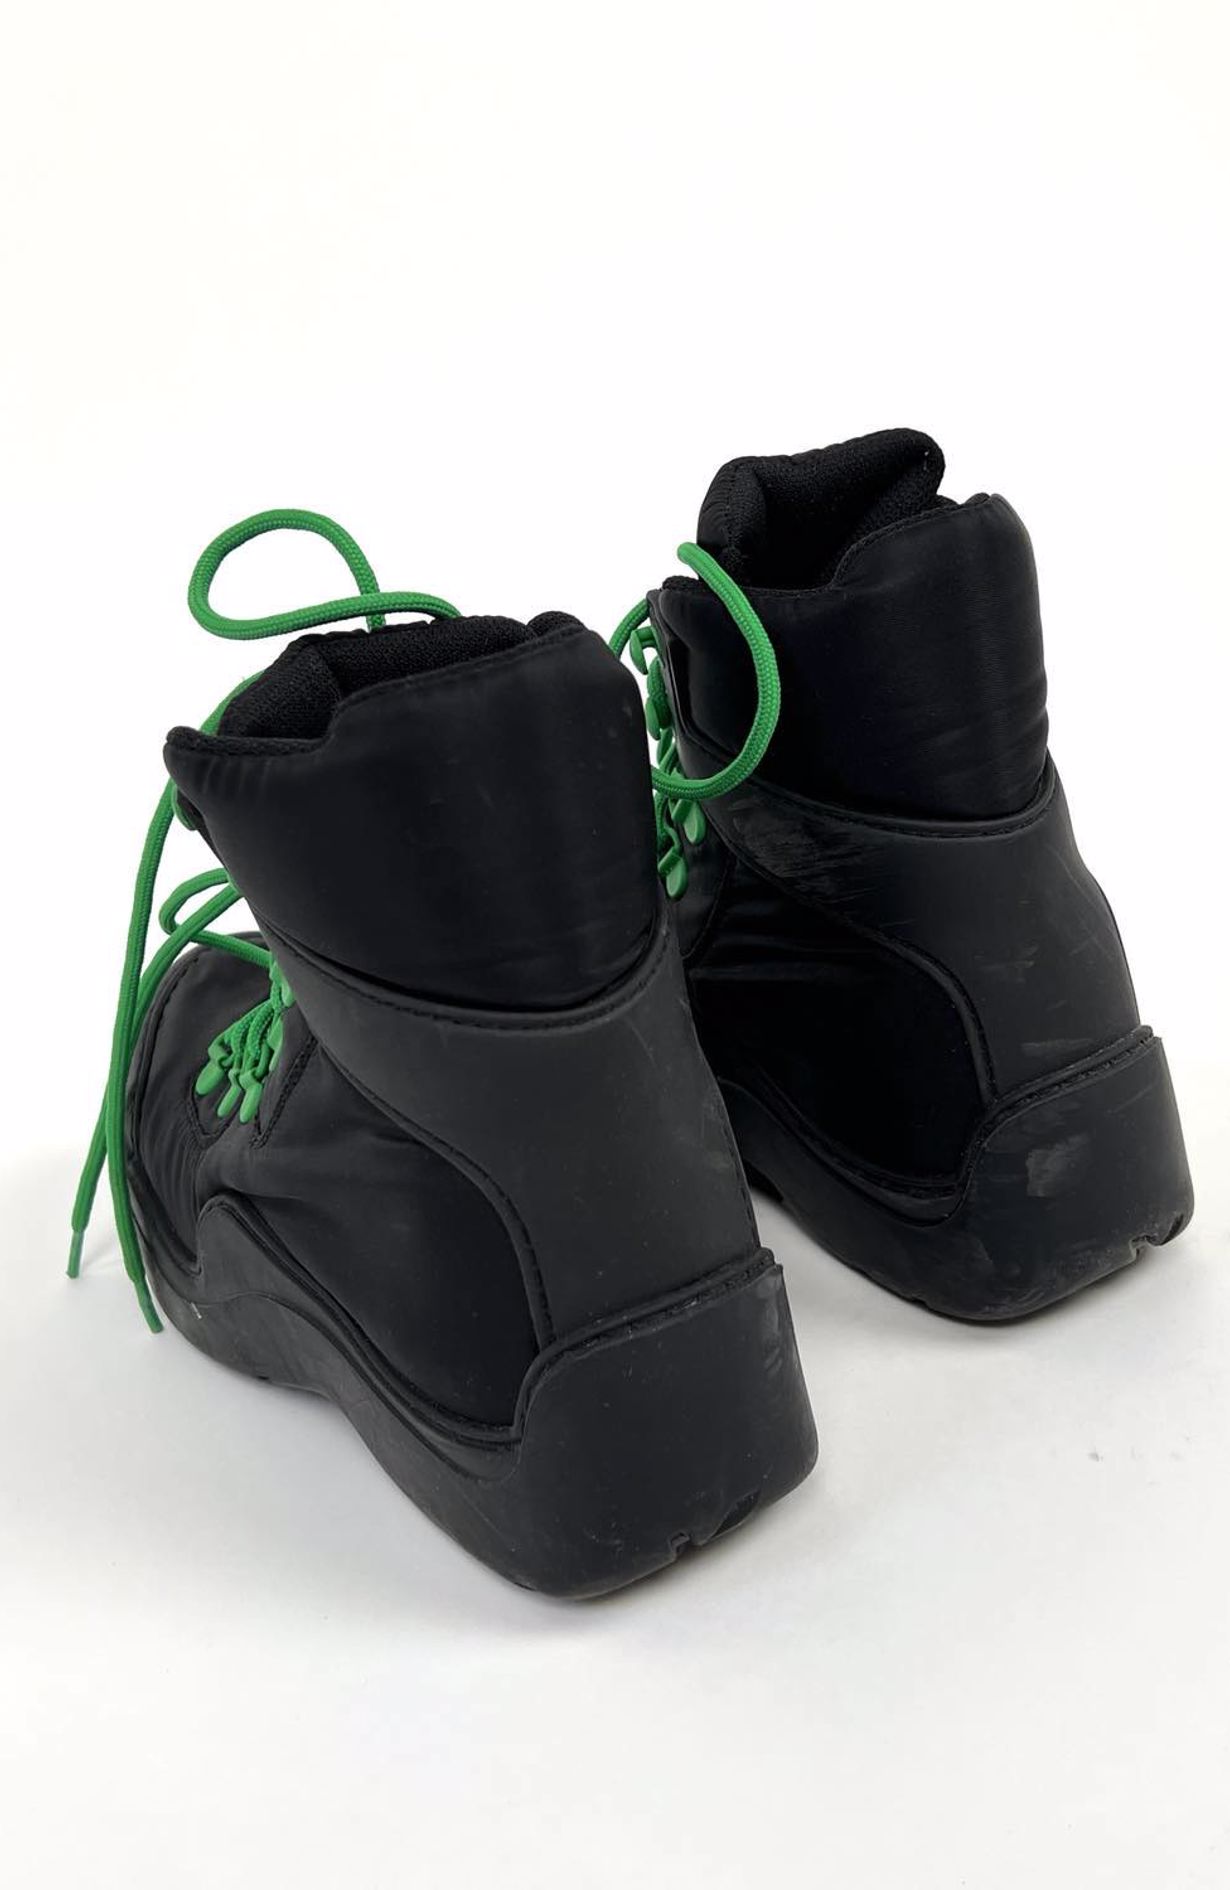 Bottega Veneta boots black green laces size 35